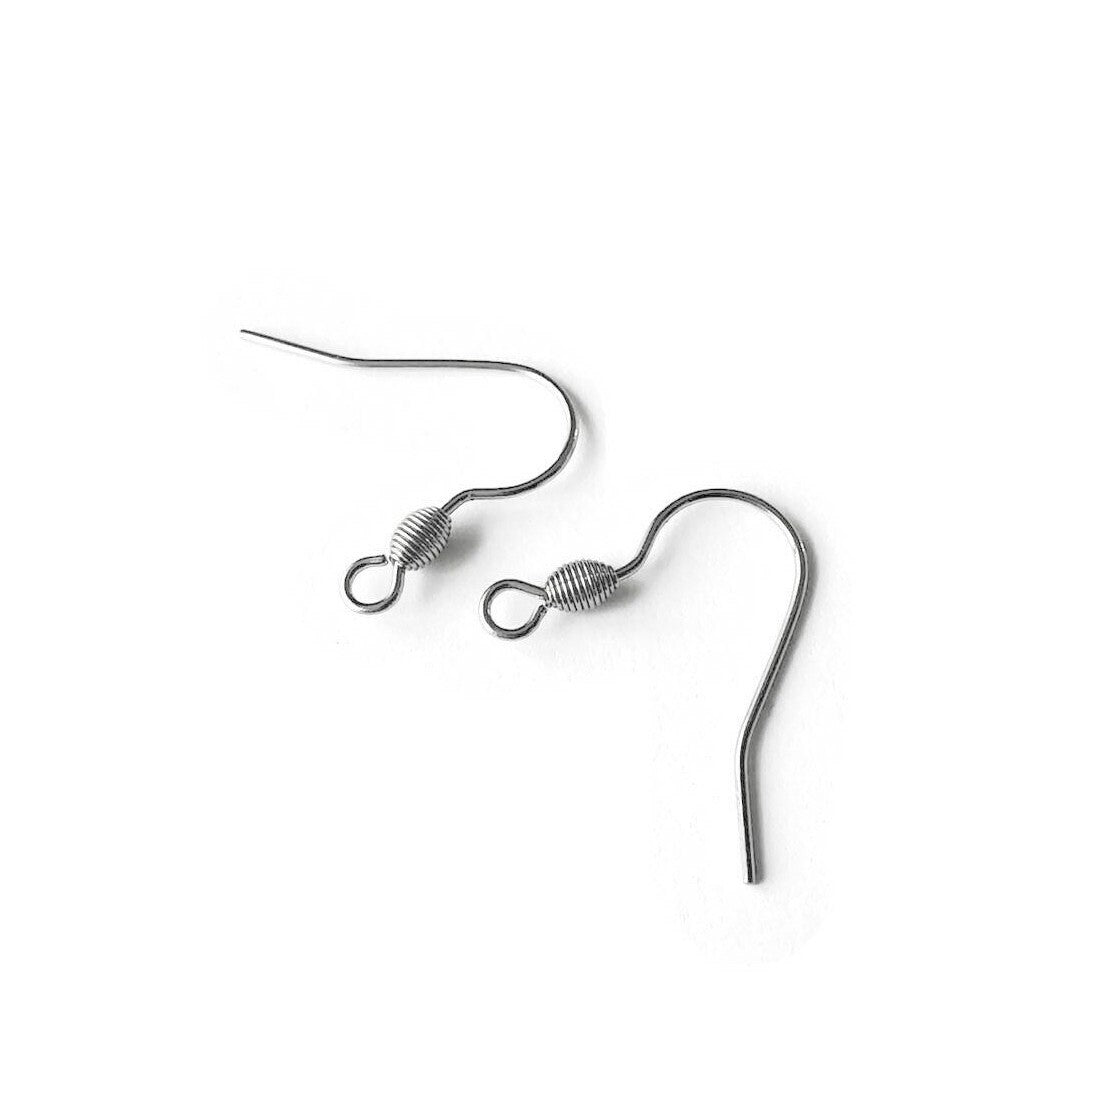 100Pcs Earring Hooks Jewelry Making Finding Supplies Earring Hook Wire Craft